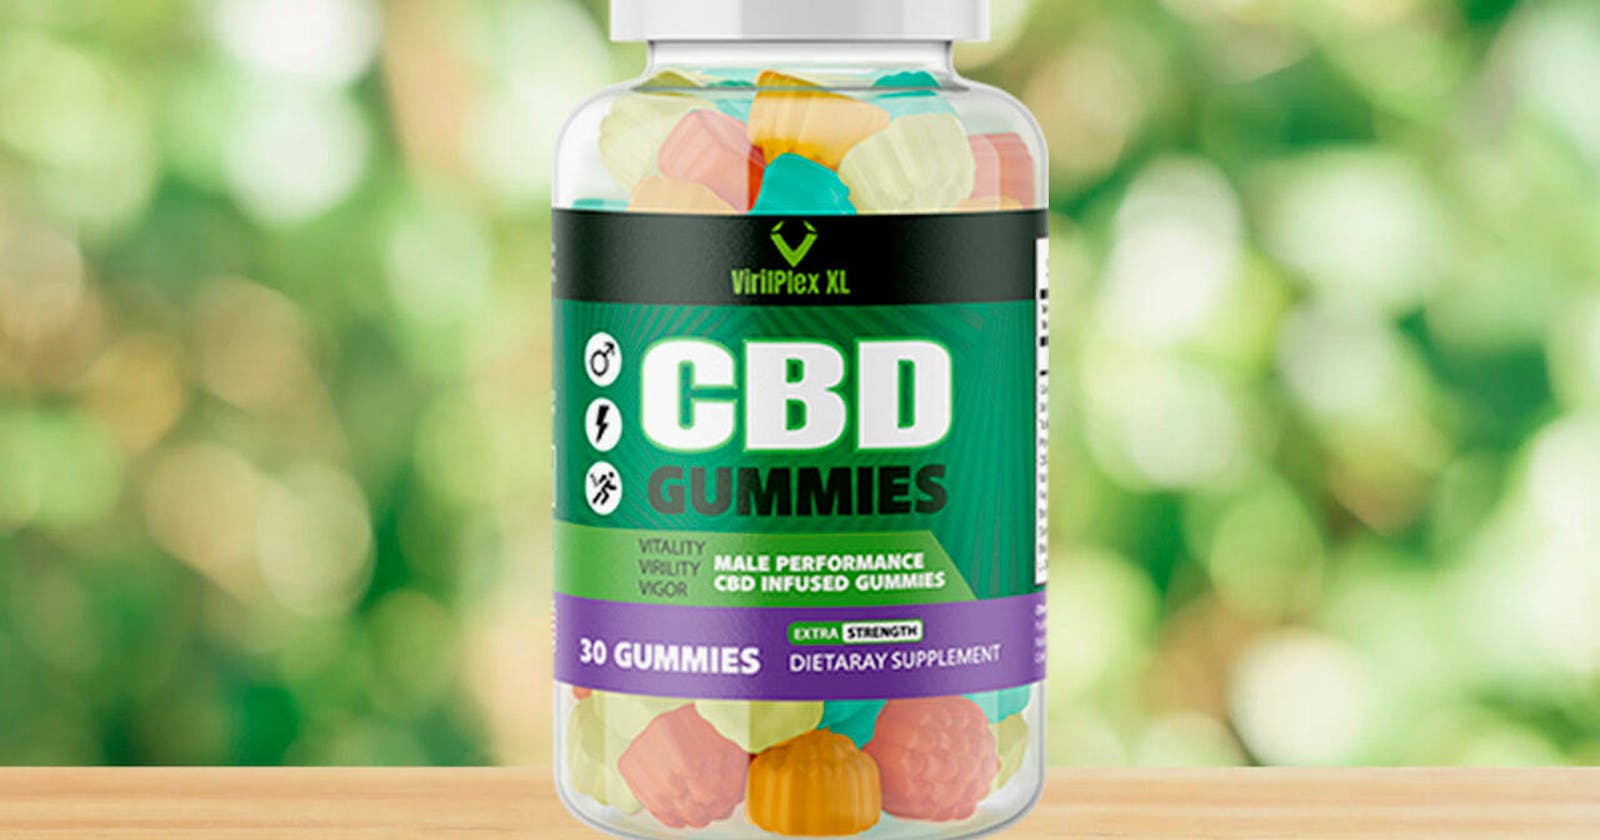 VirilPlex XL CBD Gummies Reviews 2023 Ingredients Price